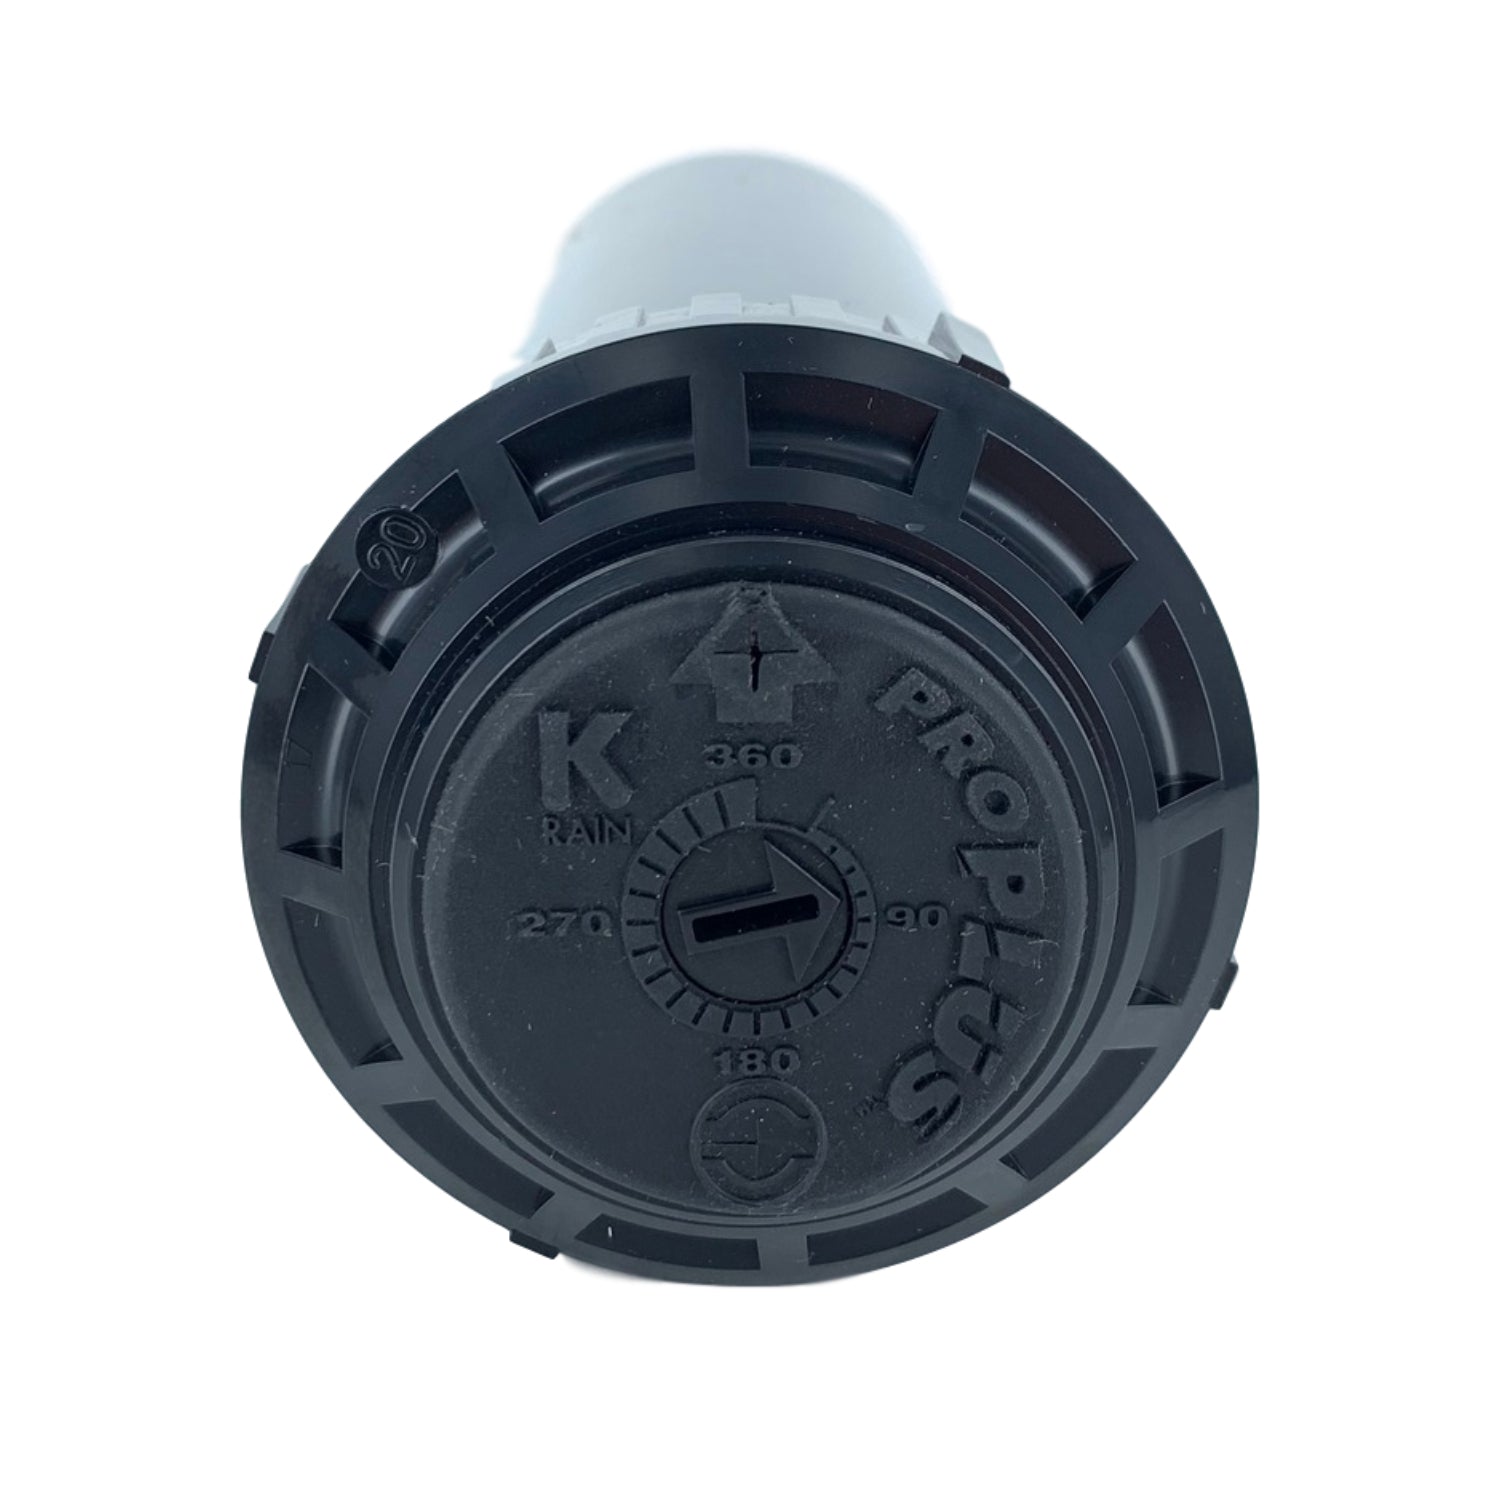 K-Rain - 11003 - PROPlus, 5" Adjustable Arc Rotor, 3/4" Inlet